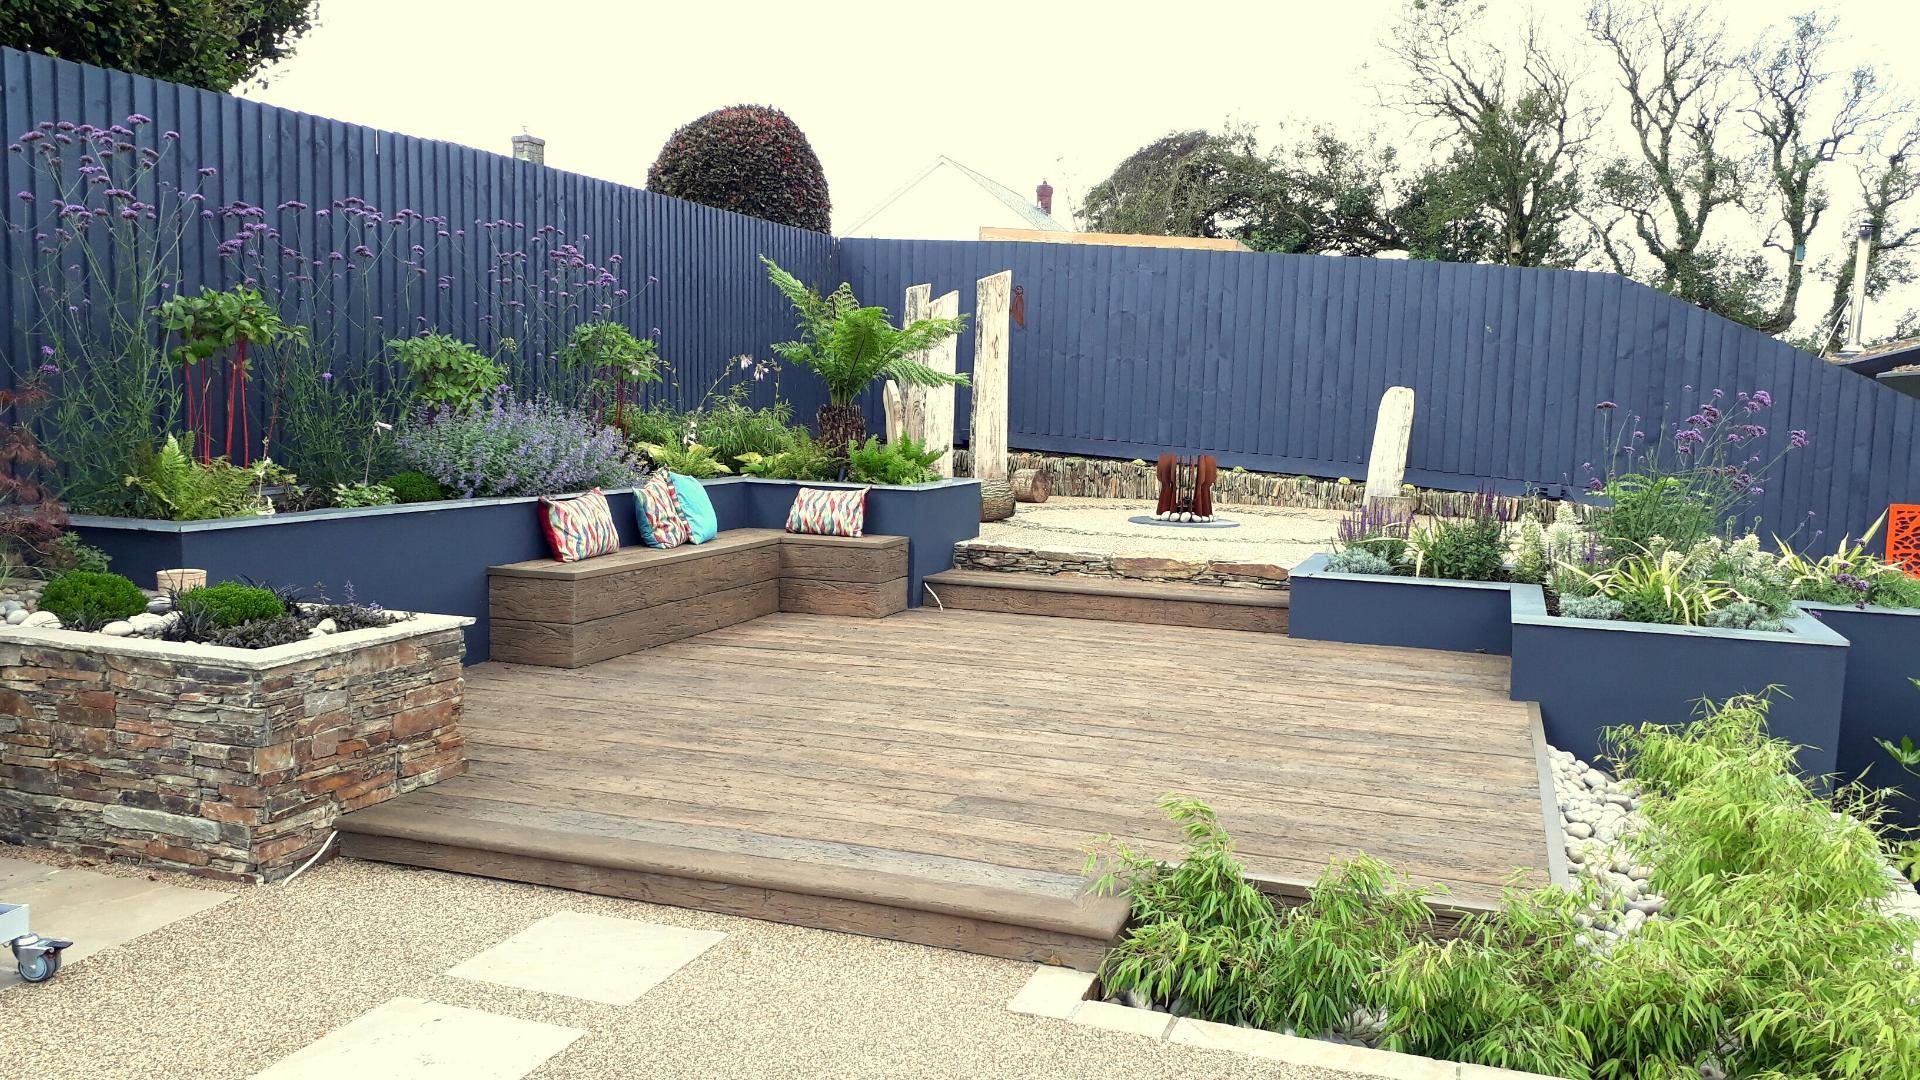 Alison Bockh Garden Design - A garden for grown ups not children. Furniture to come.